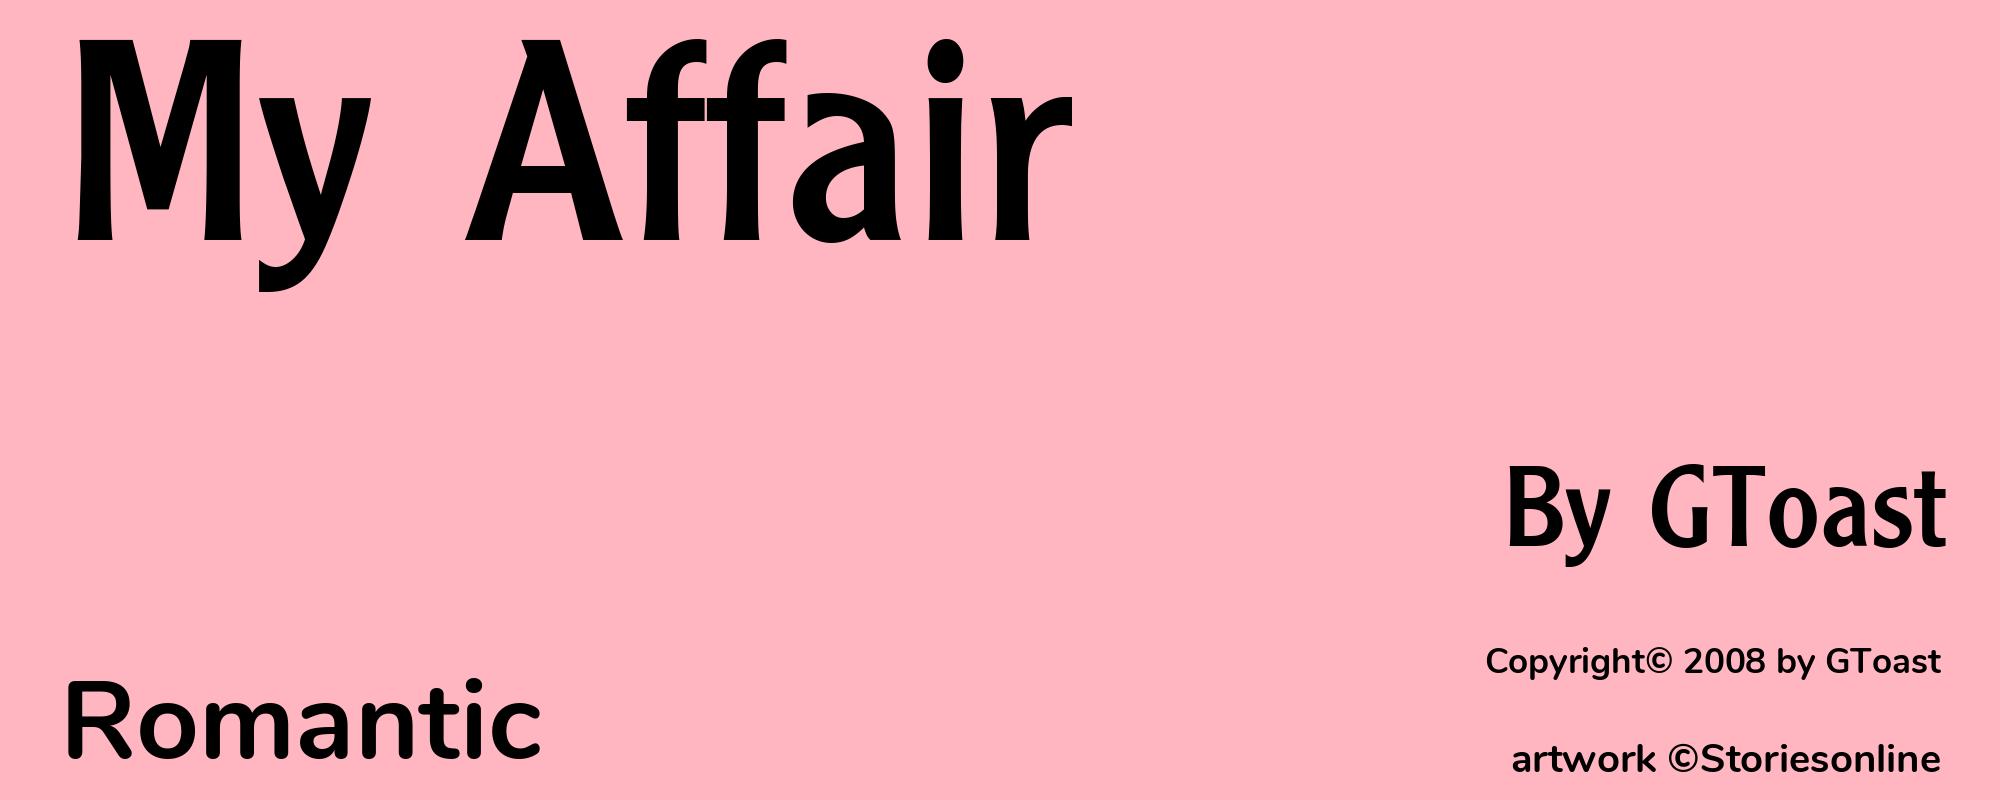 My Affair - Cover